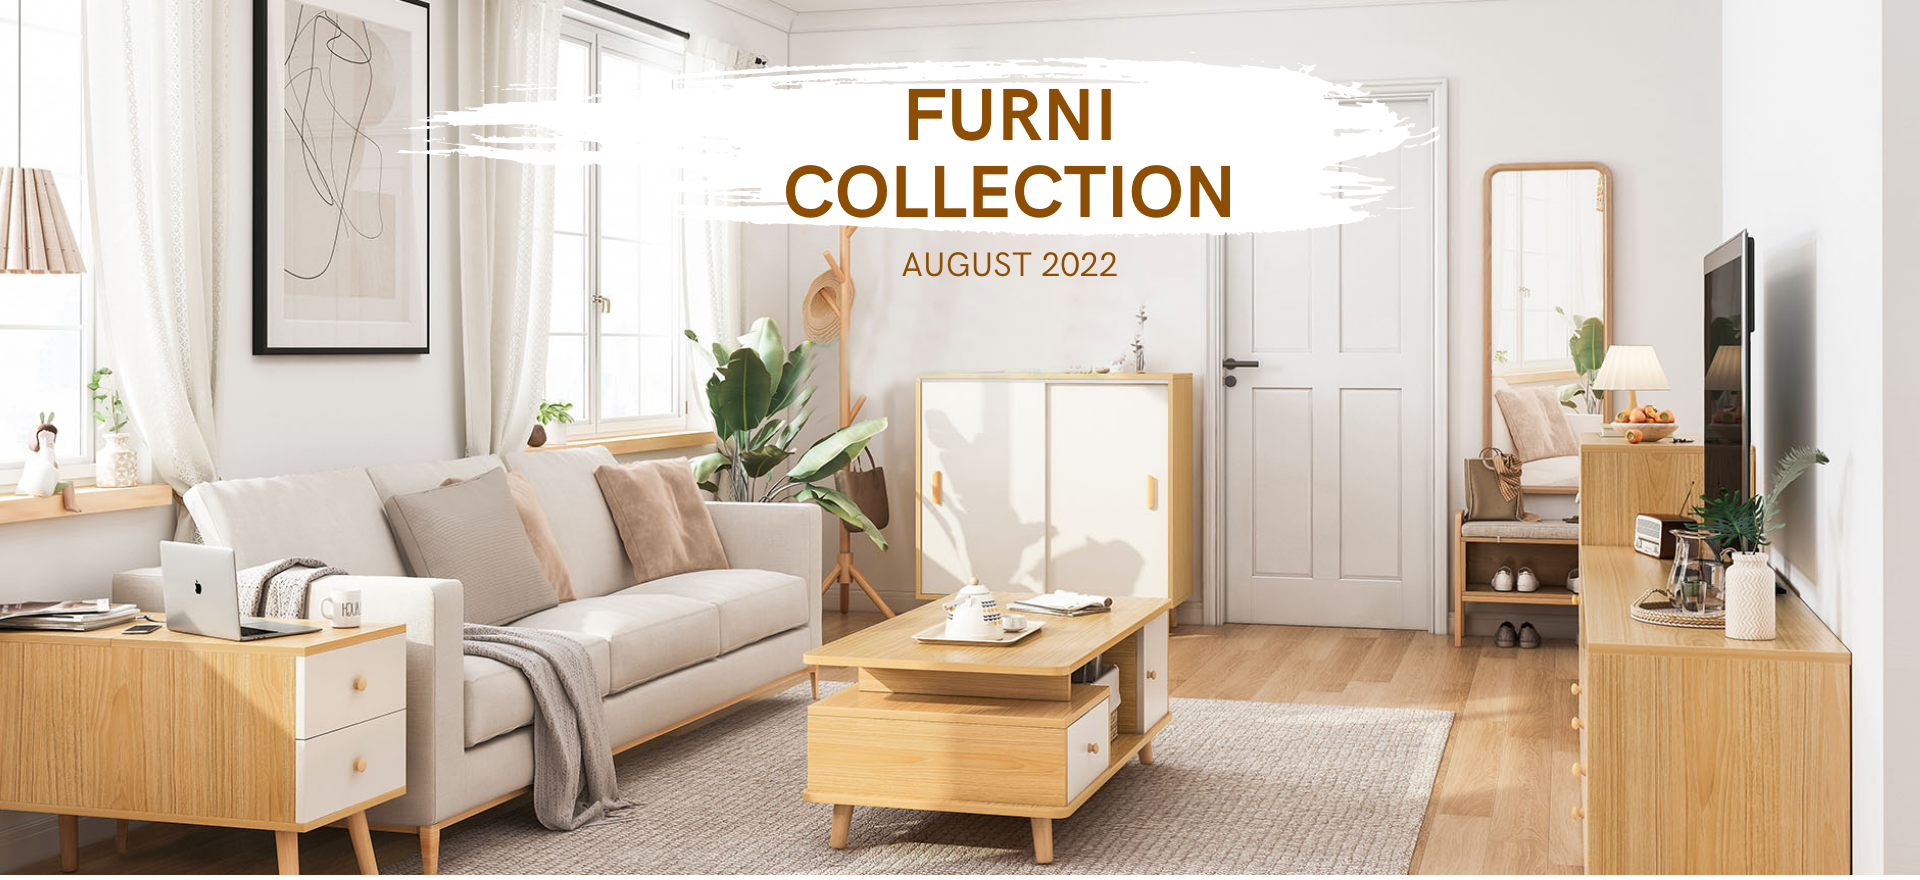 furni-collection-2022